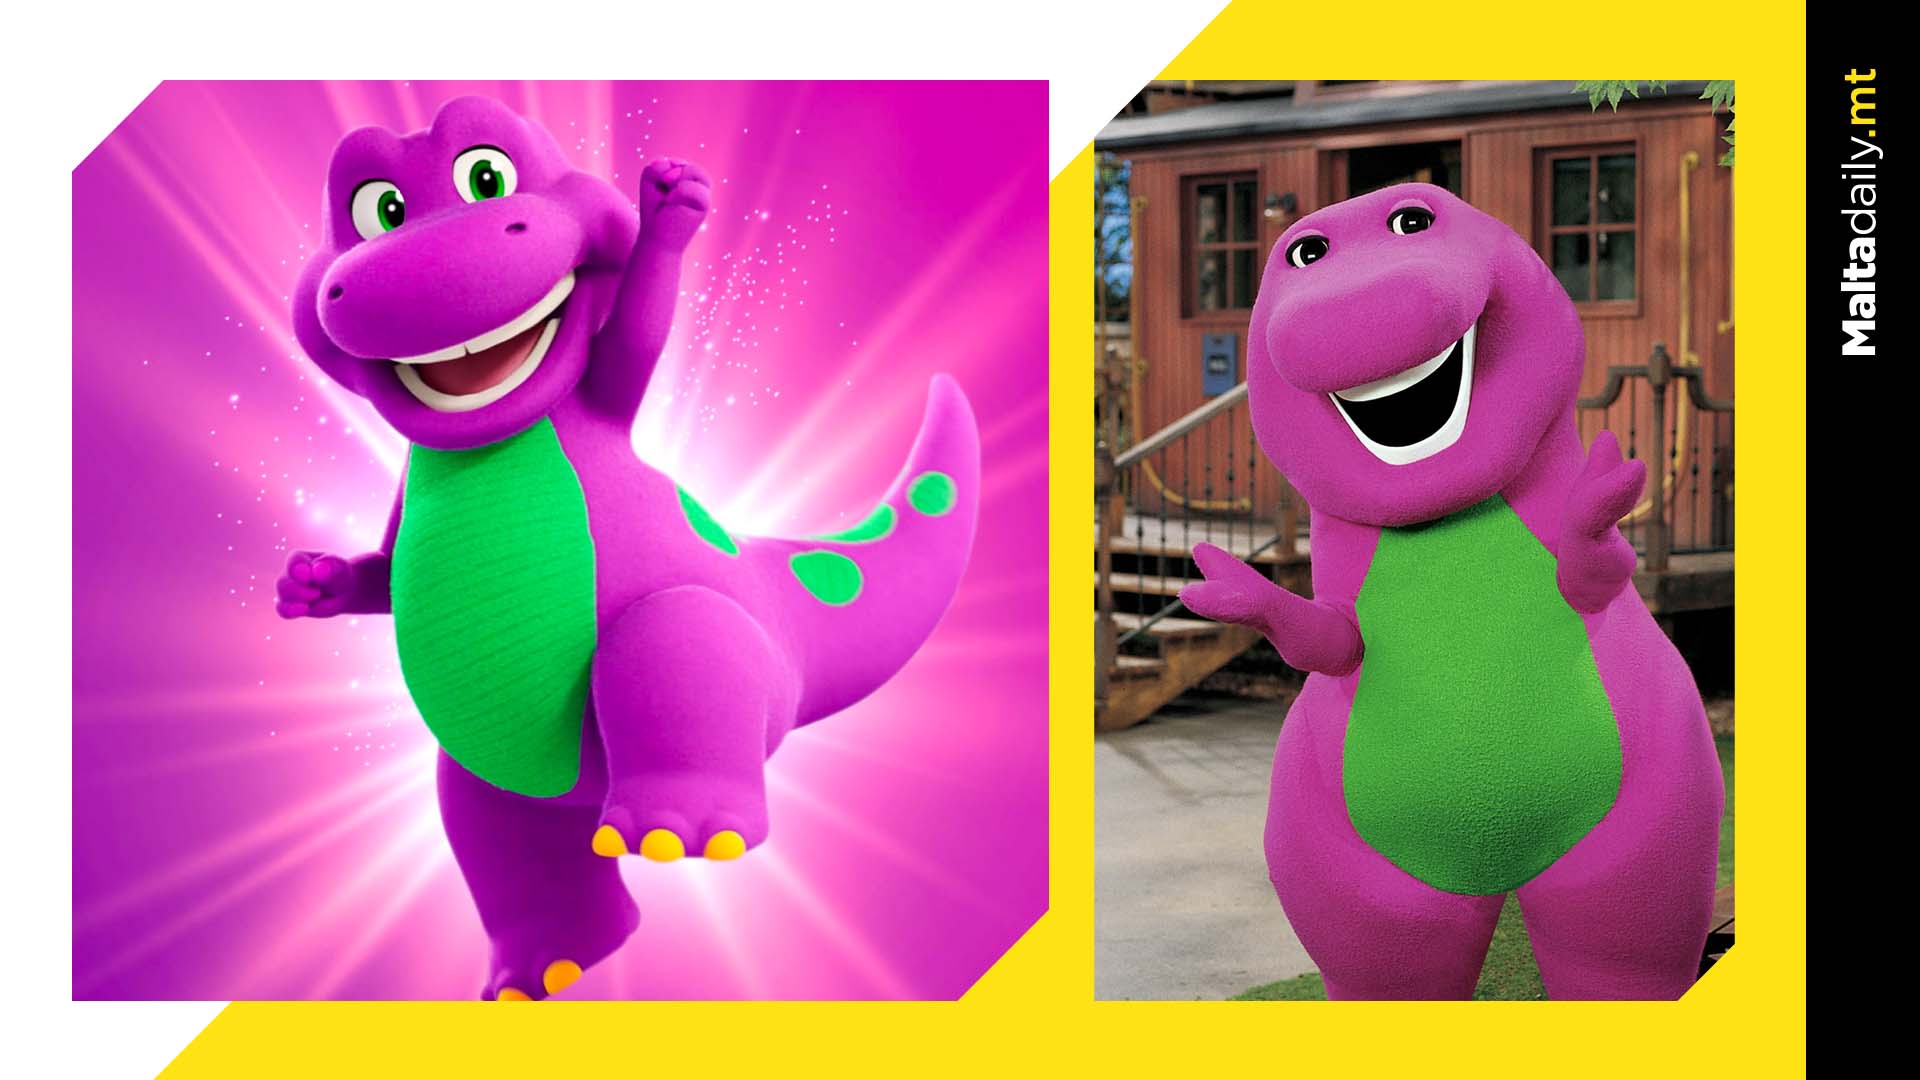 Barney the purple dinosaur is coming back